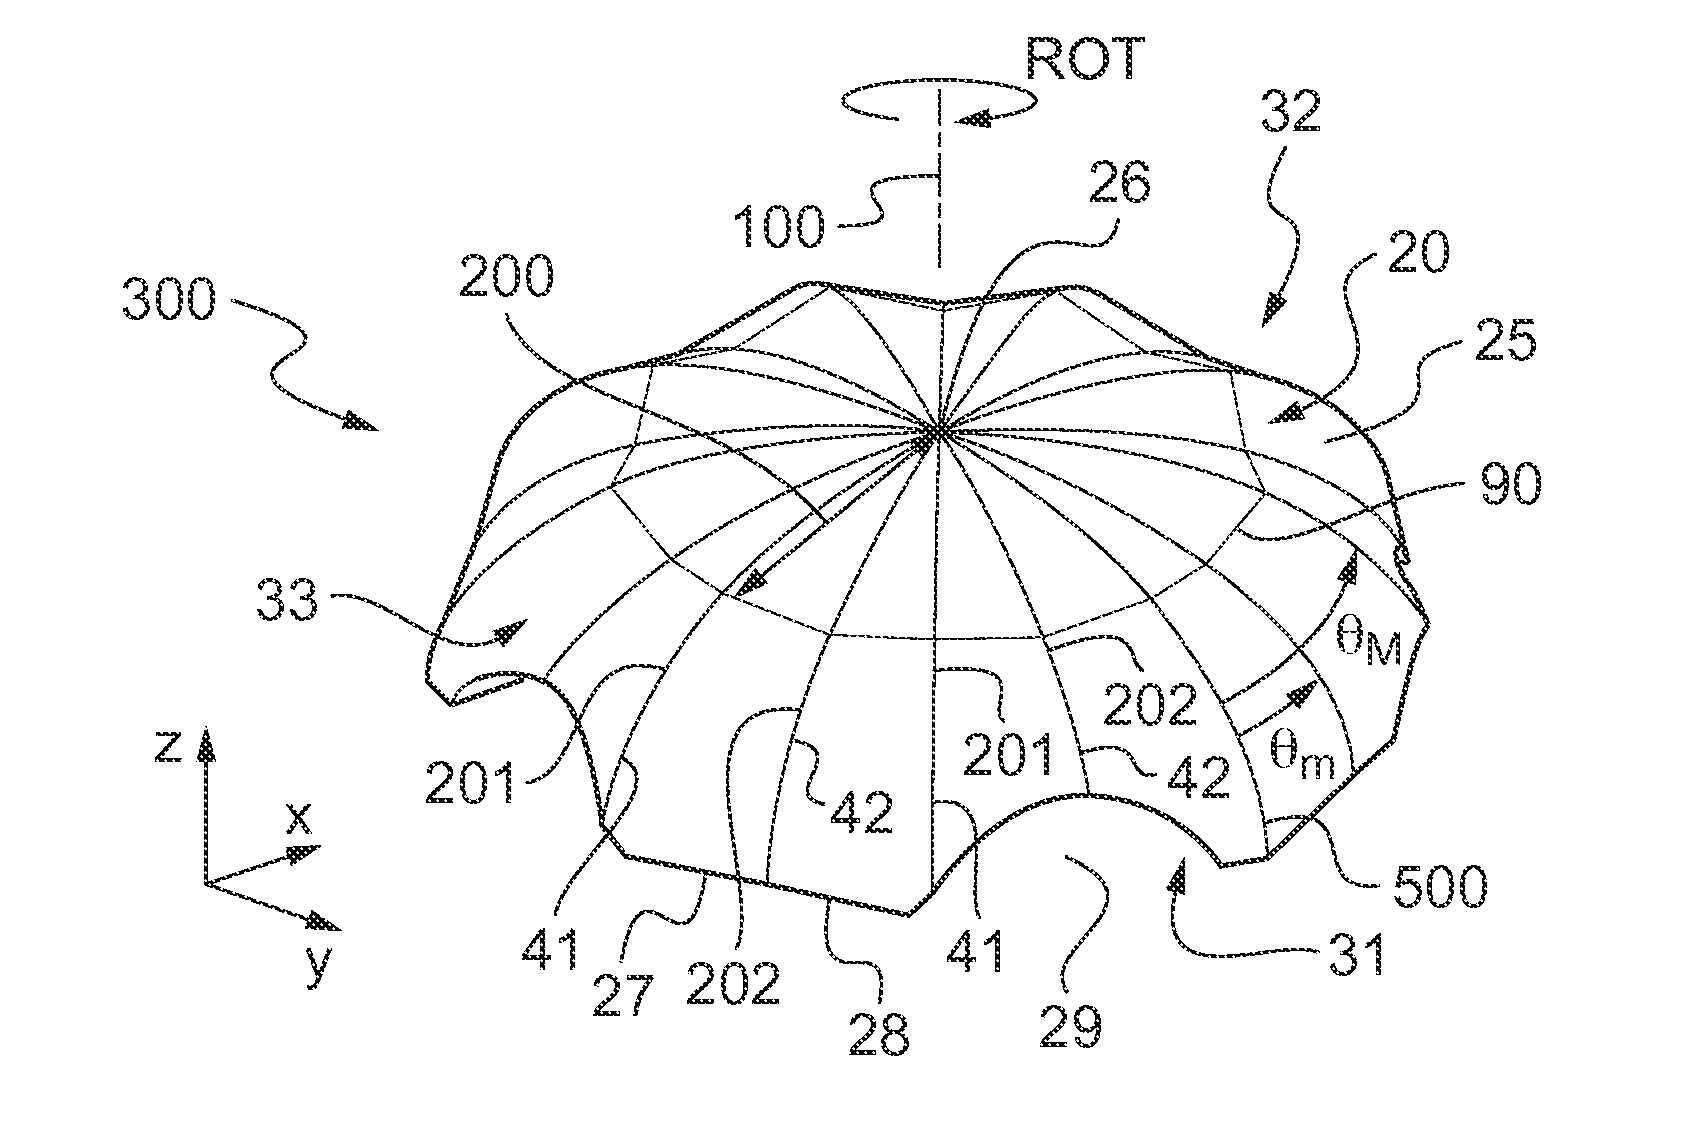 Rotor dome, a rotor, and a rotorcraft